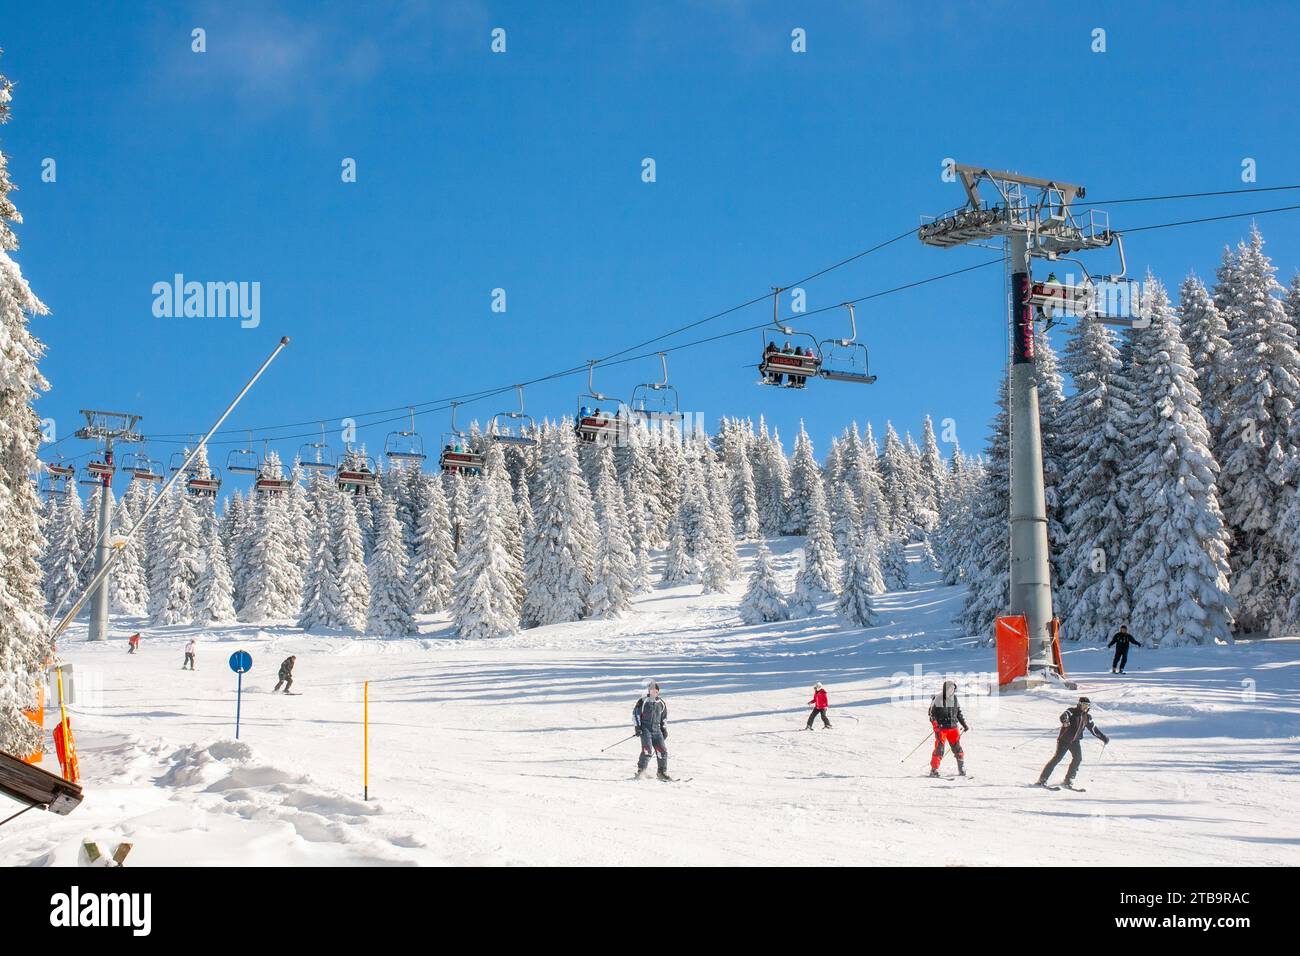 Kopaonik, Serbia - January 22, 2016: Ski resort Kopaonik, Serbia, ski slope, people on the ski lift, mountains, houses and buildings panorama Stock Photo